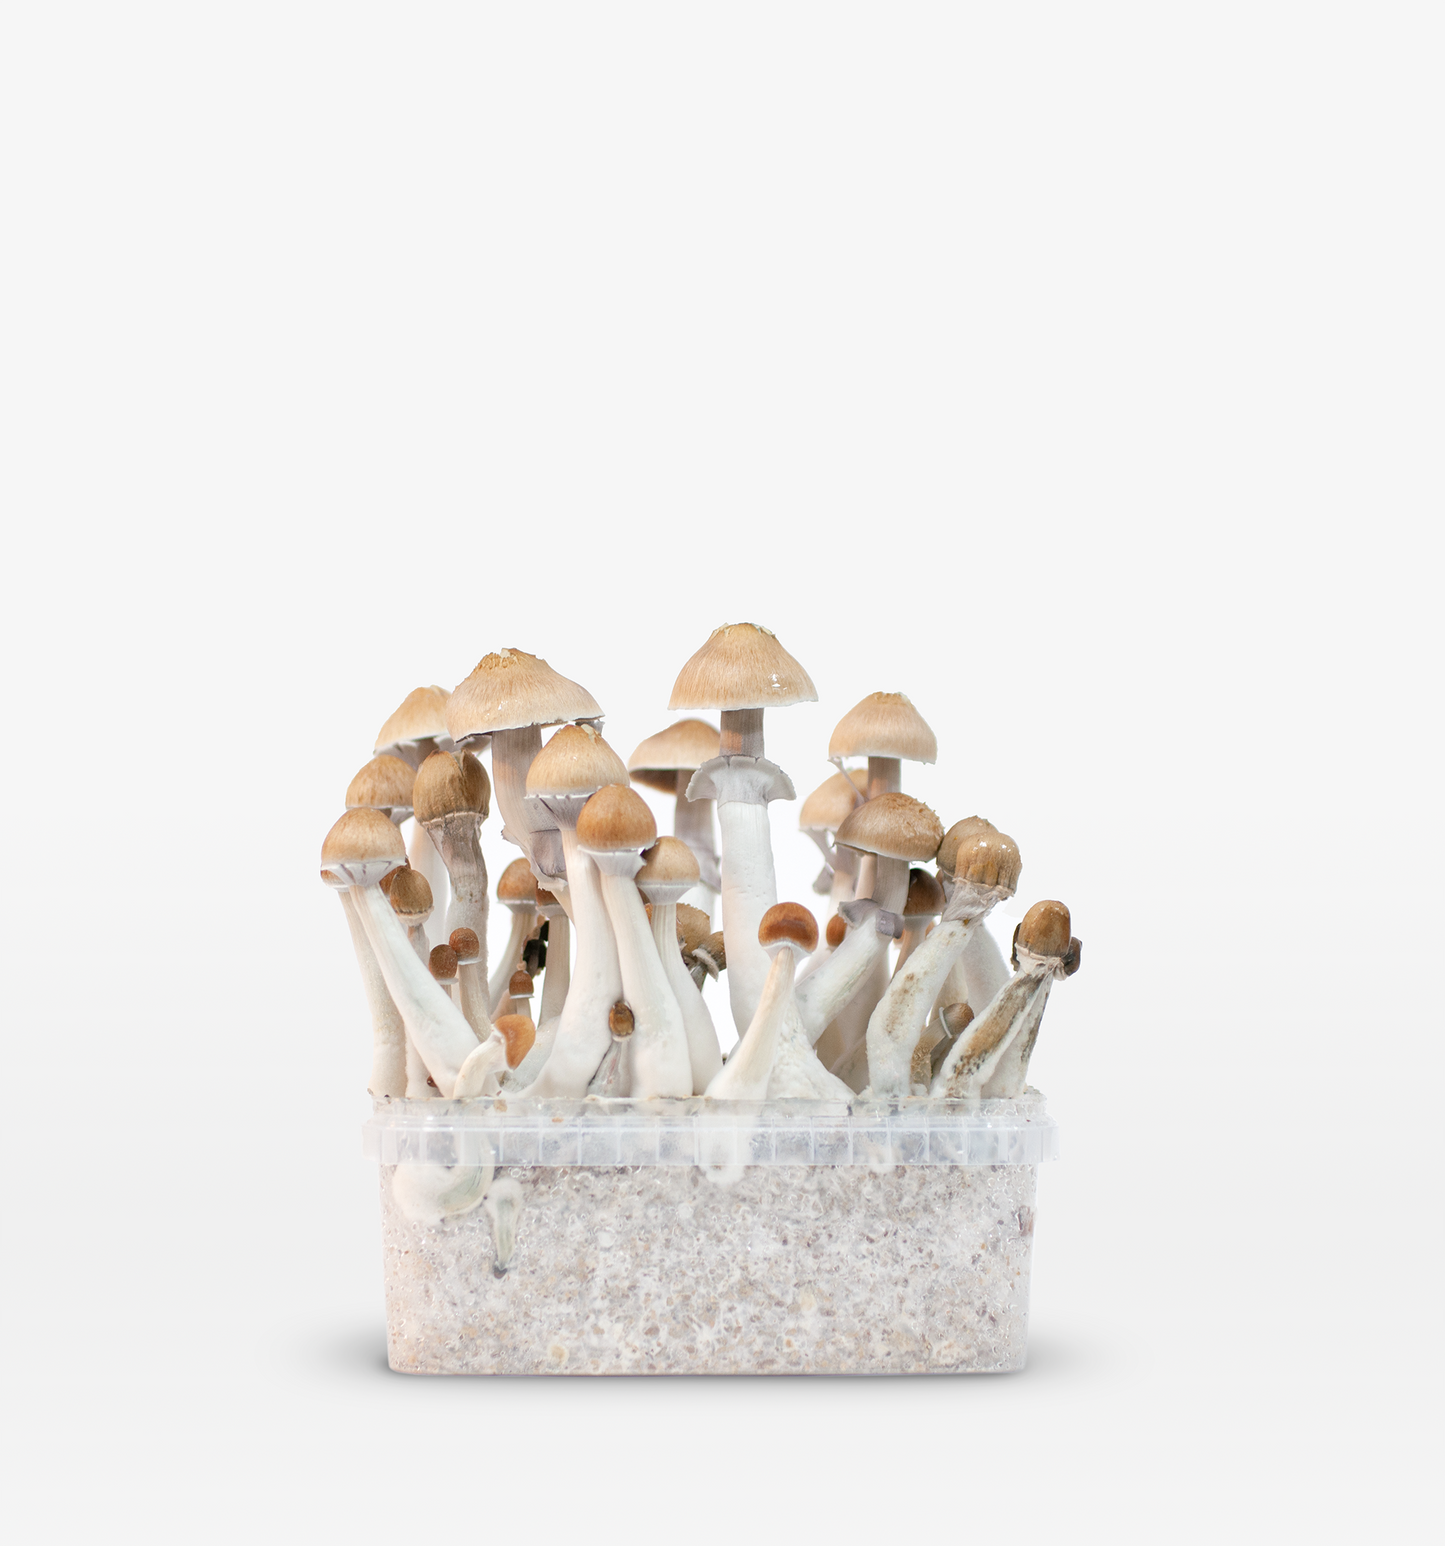 Kit de culture de champignons magiques (classique)